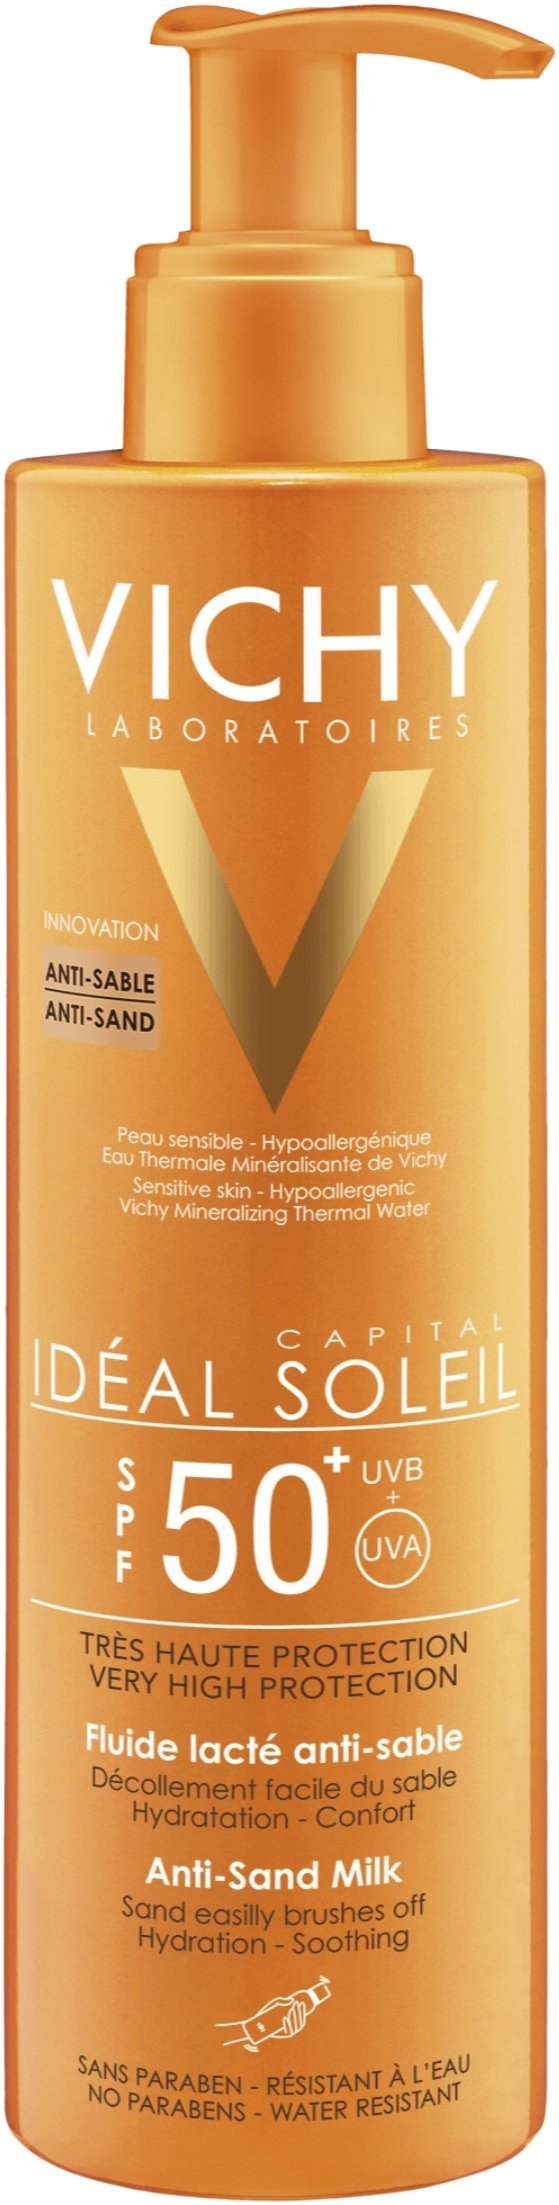 Vichy NYHED Idéal Soleil Anti-Sand Milk til ansigt/krop SPF 50+ Flaske m/ pumpe 200ml